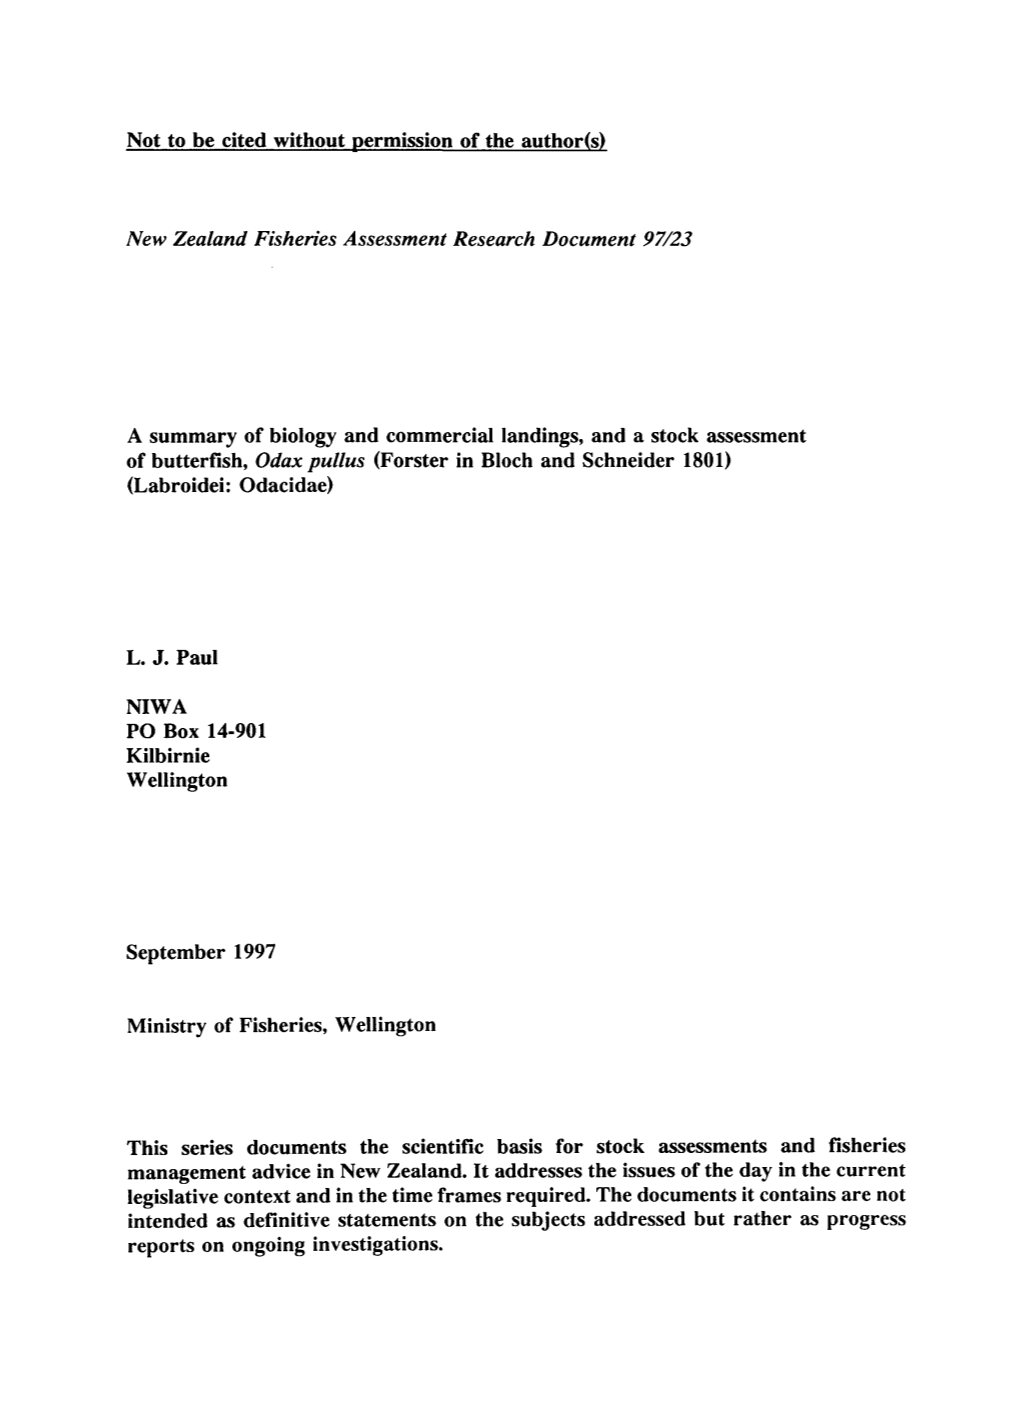 New Zealand Fisheries Assessment Research Document 97/23 L. J. Paul